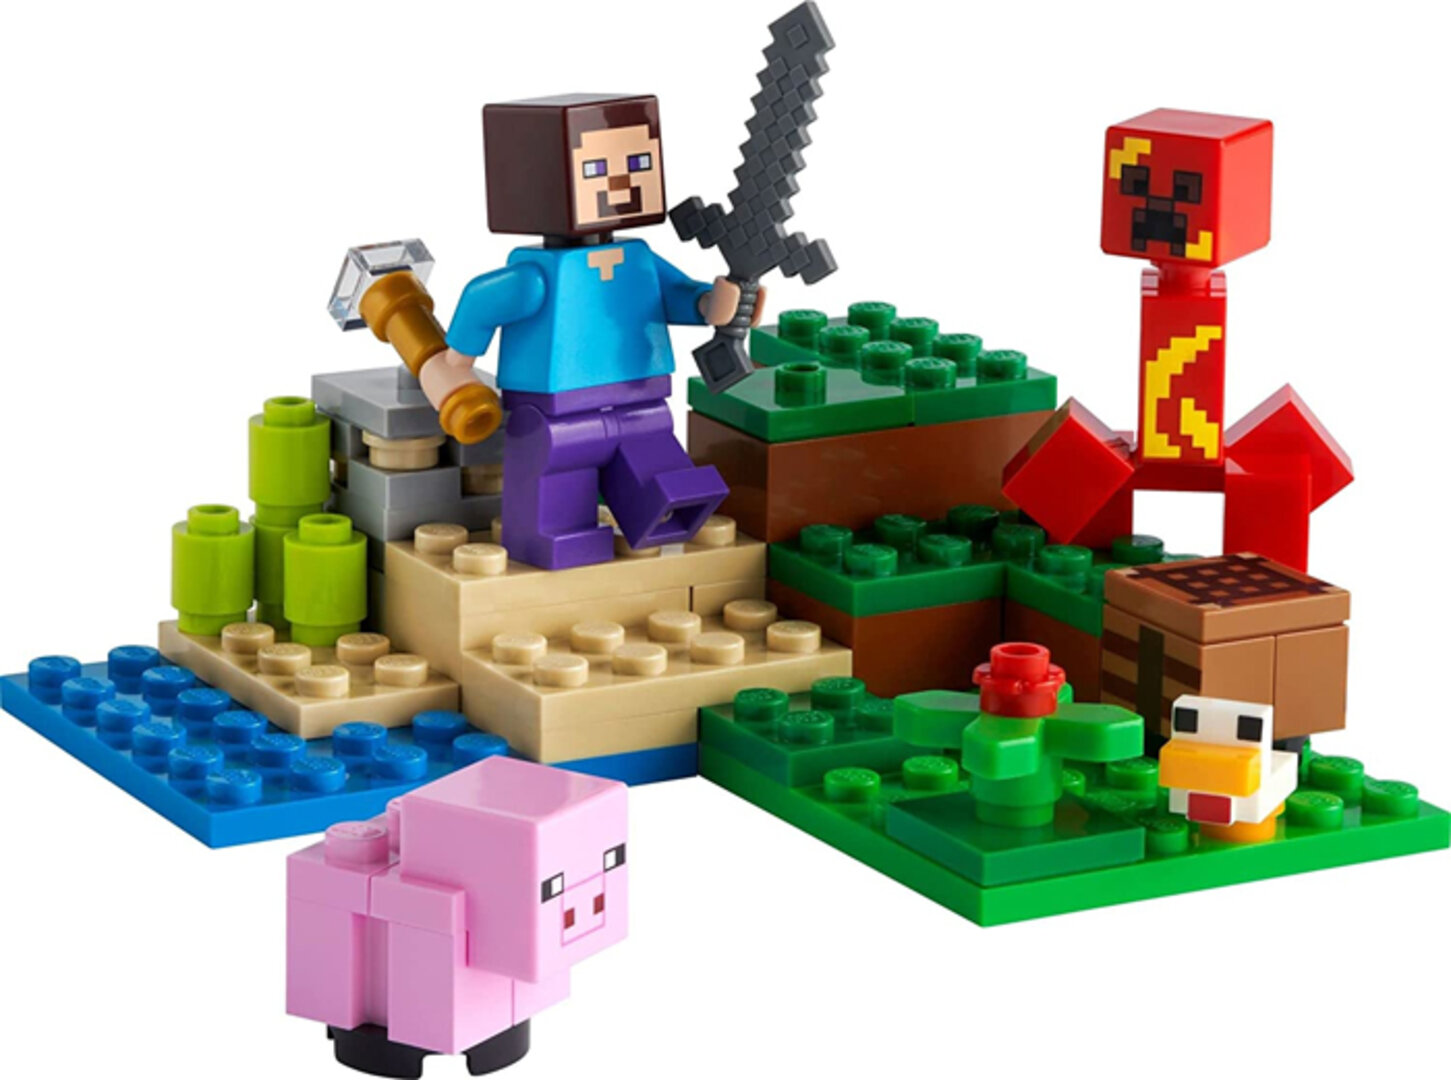 LEGO Minecraft The Creeper Ambush (21177)